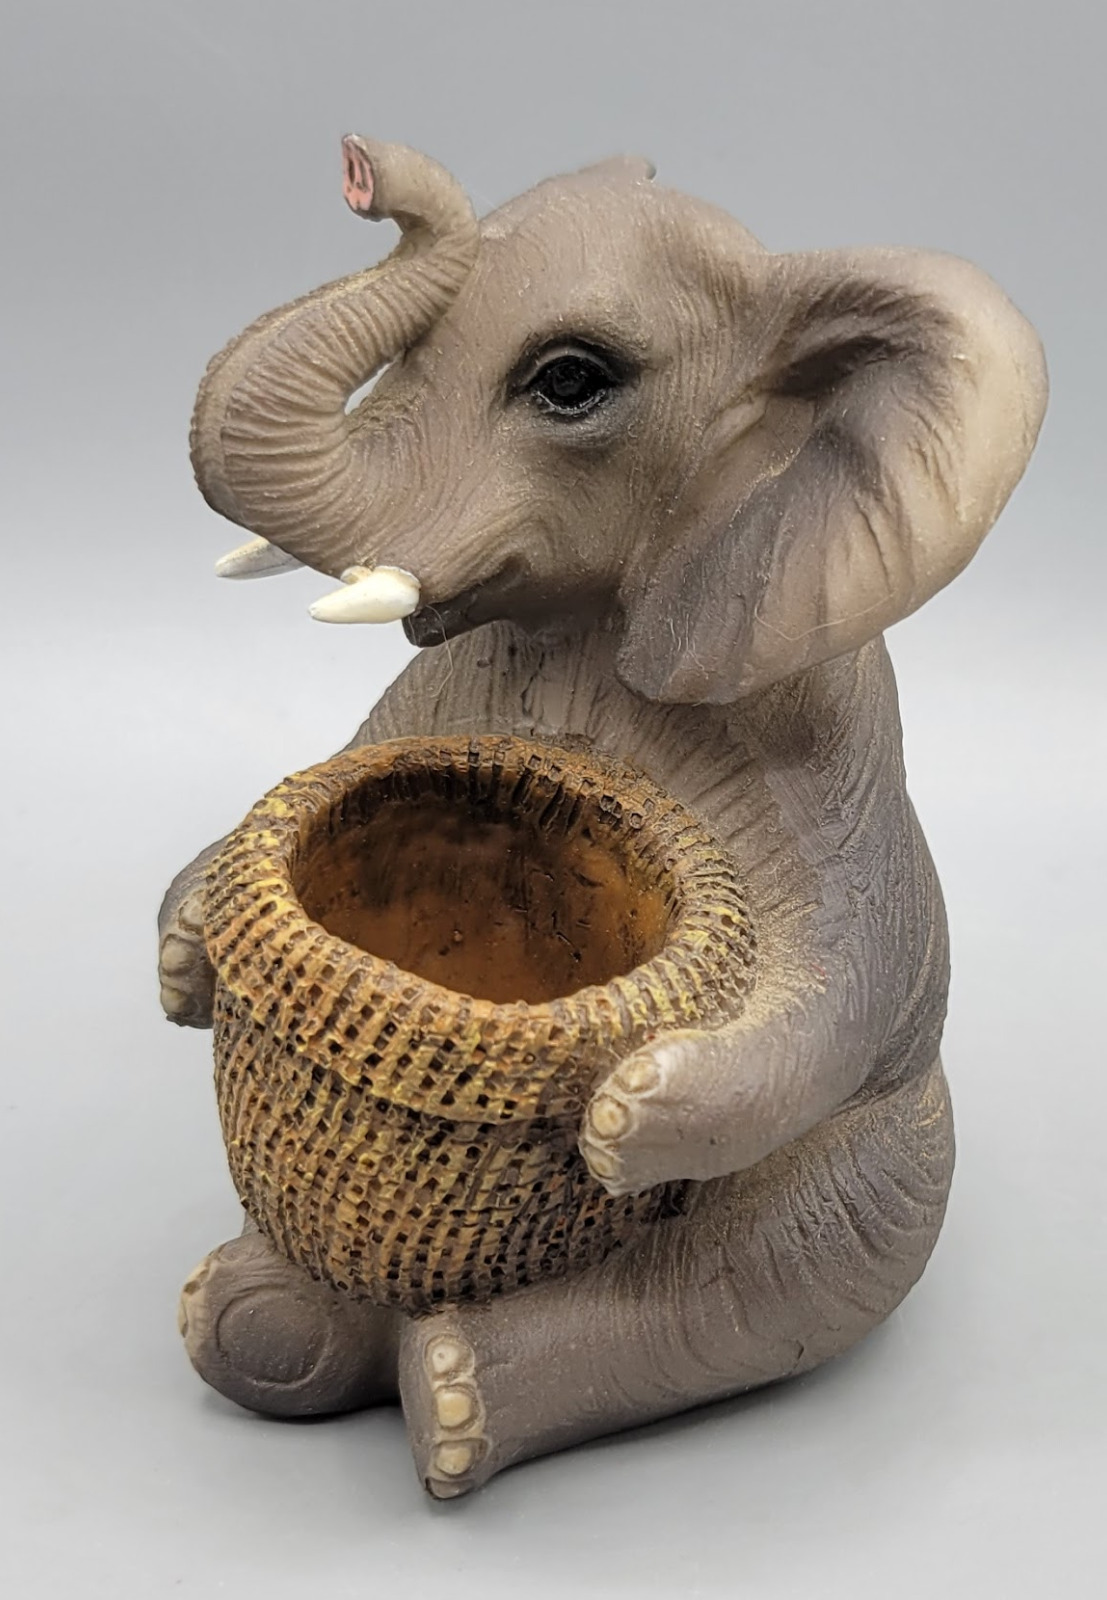 New DWK Corporation 2016 Resin Elephant Toothpick Holder Figurine